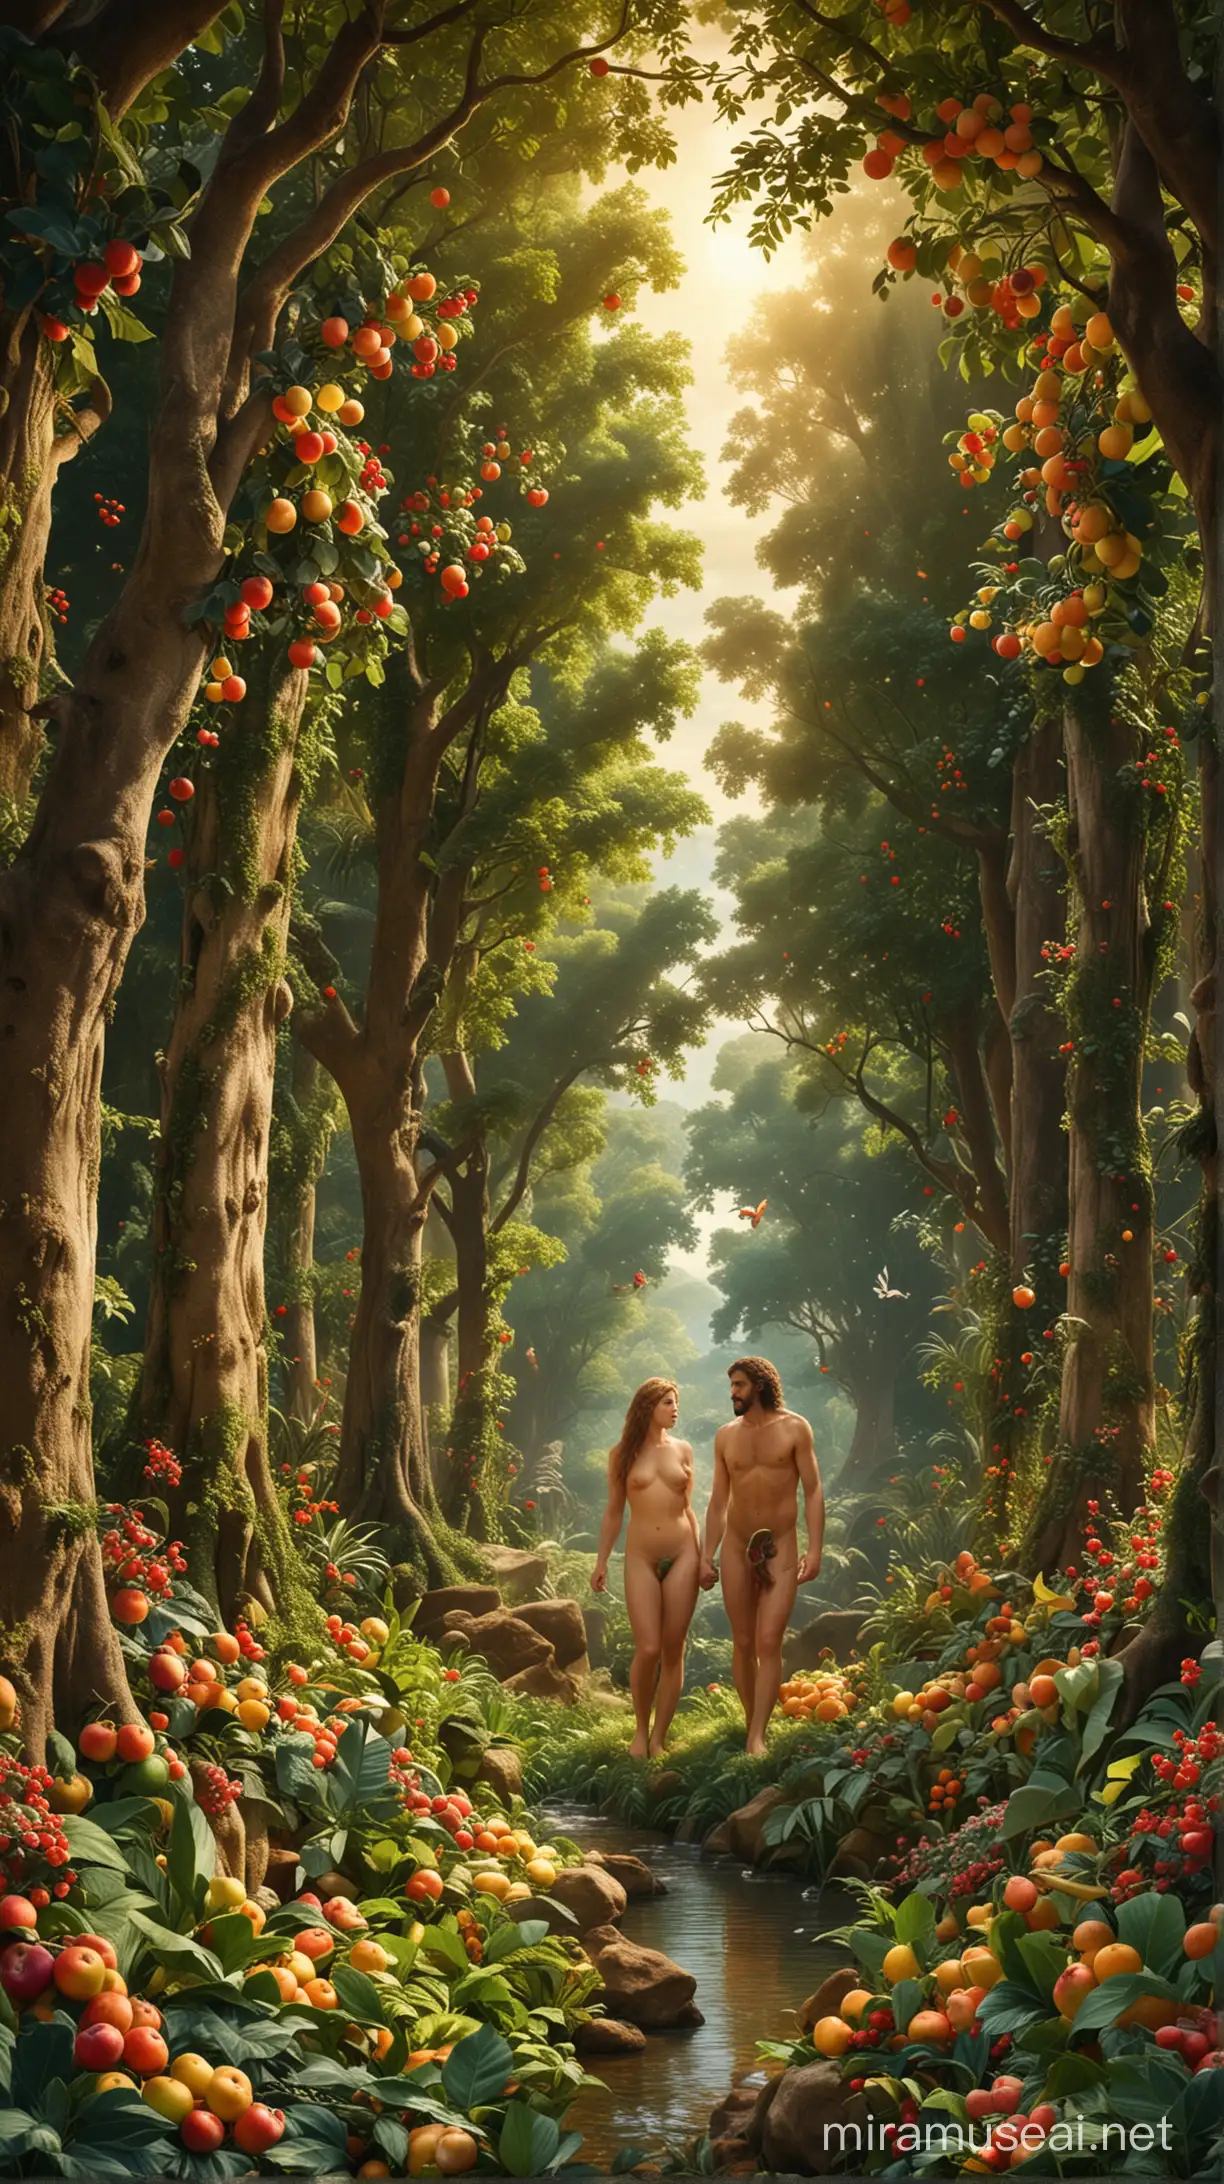 Adam and Eve in Serene Garden of Eden PreFall Biblical Scene